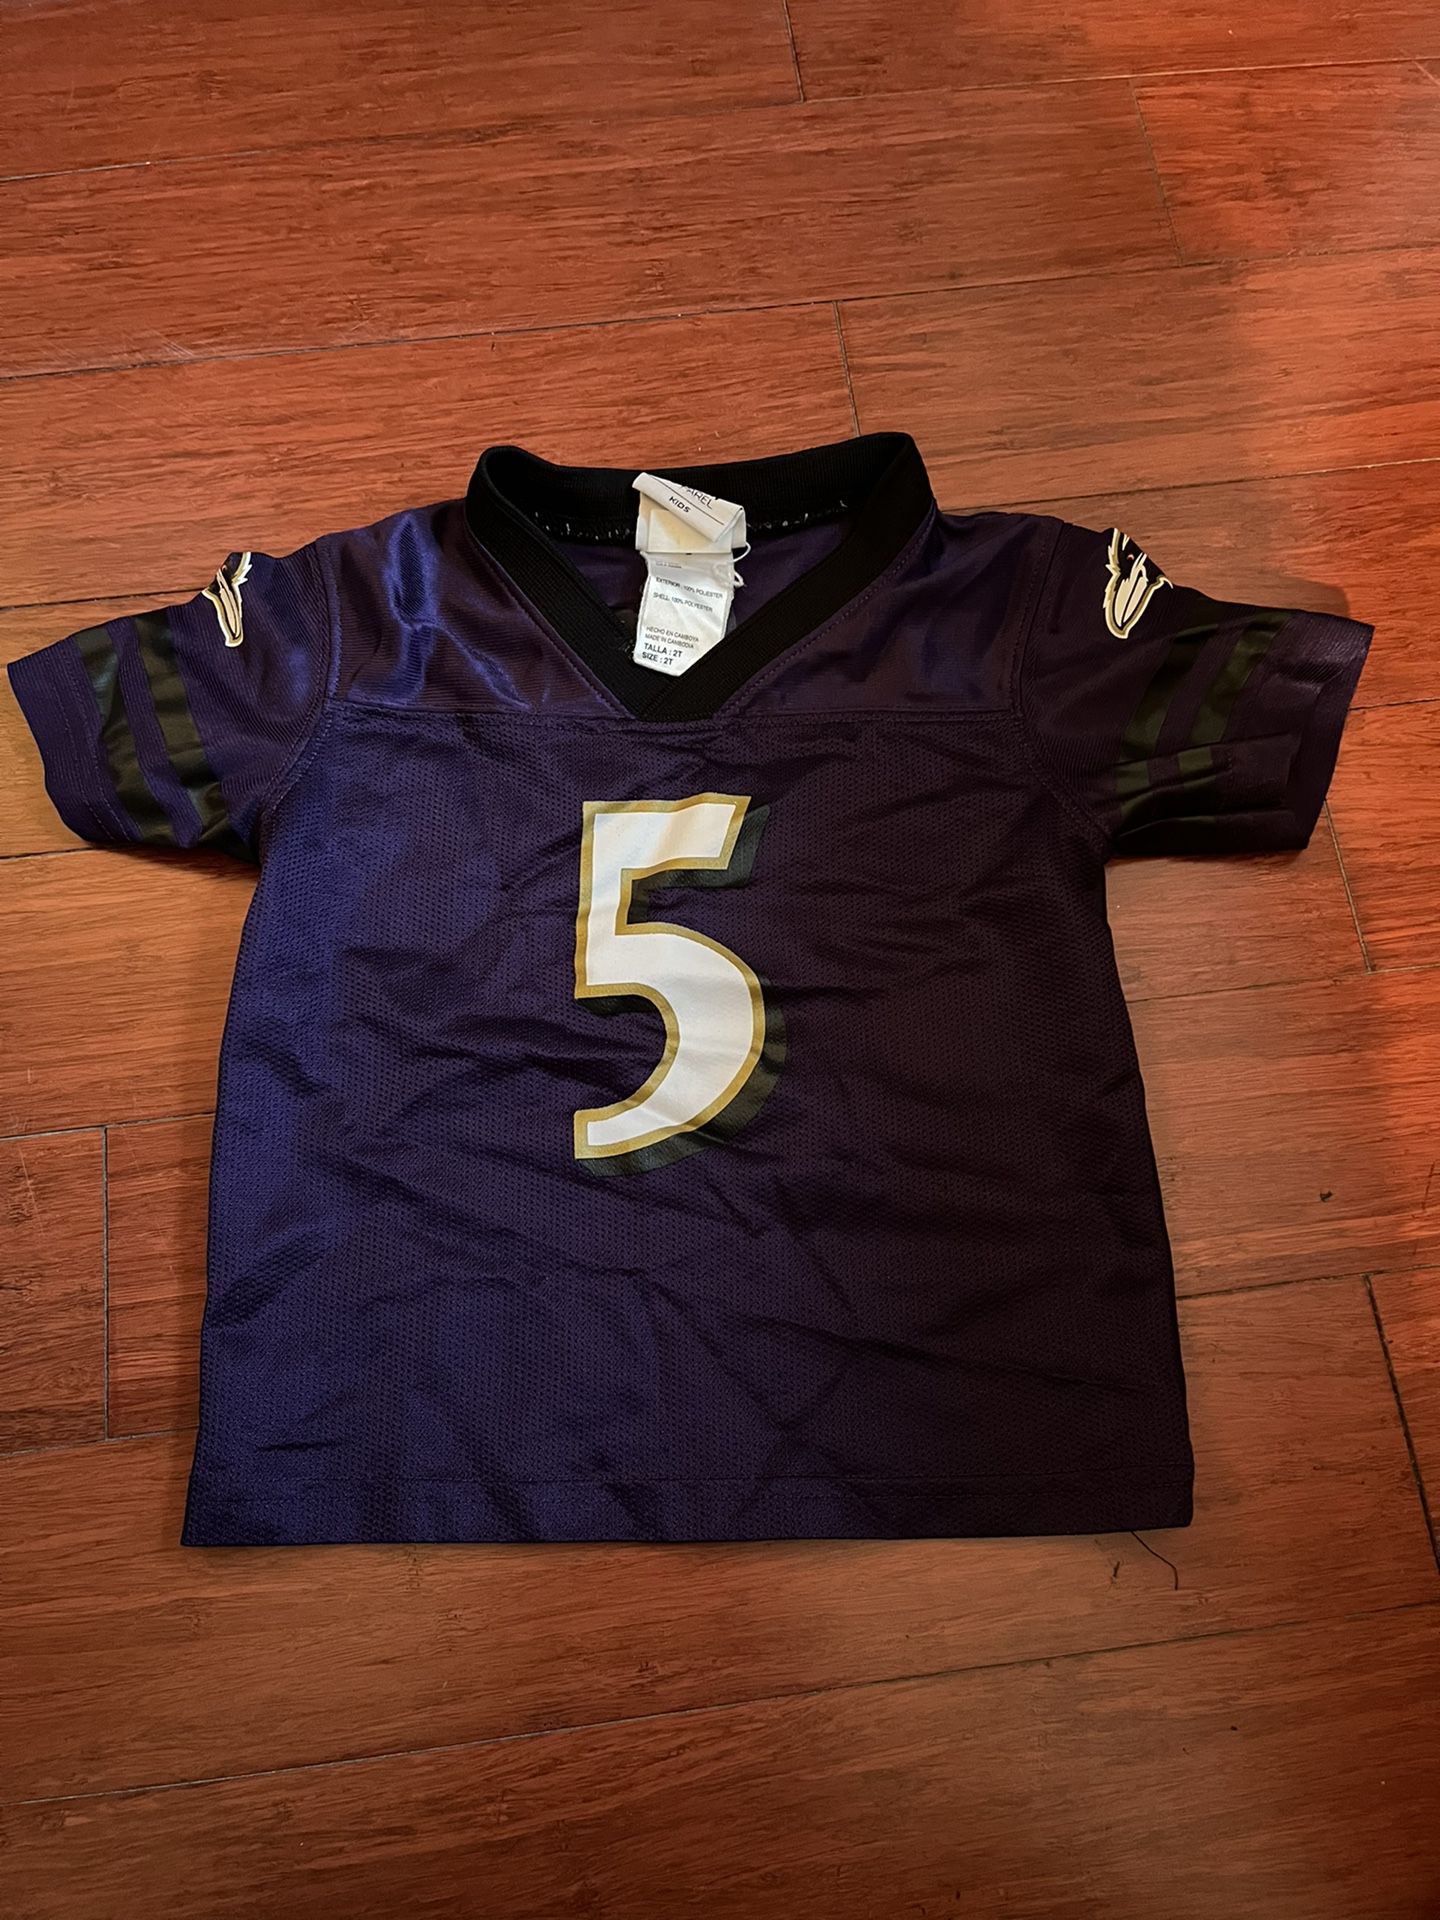 NFL Baltimore Ravens Kids Jersey #5 Flacco 2t 